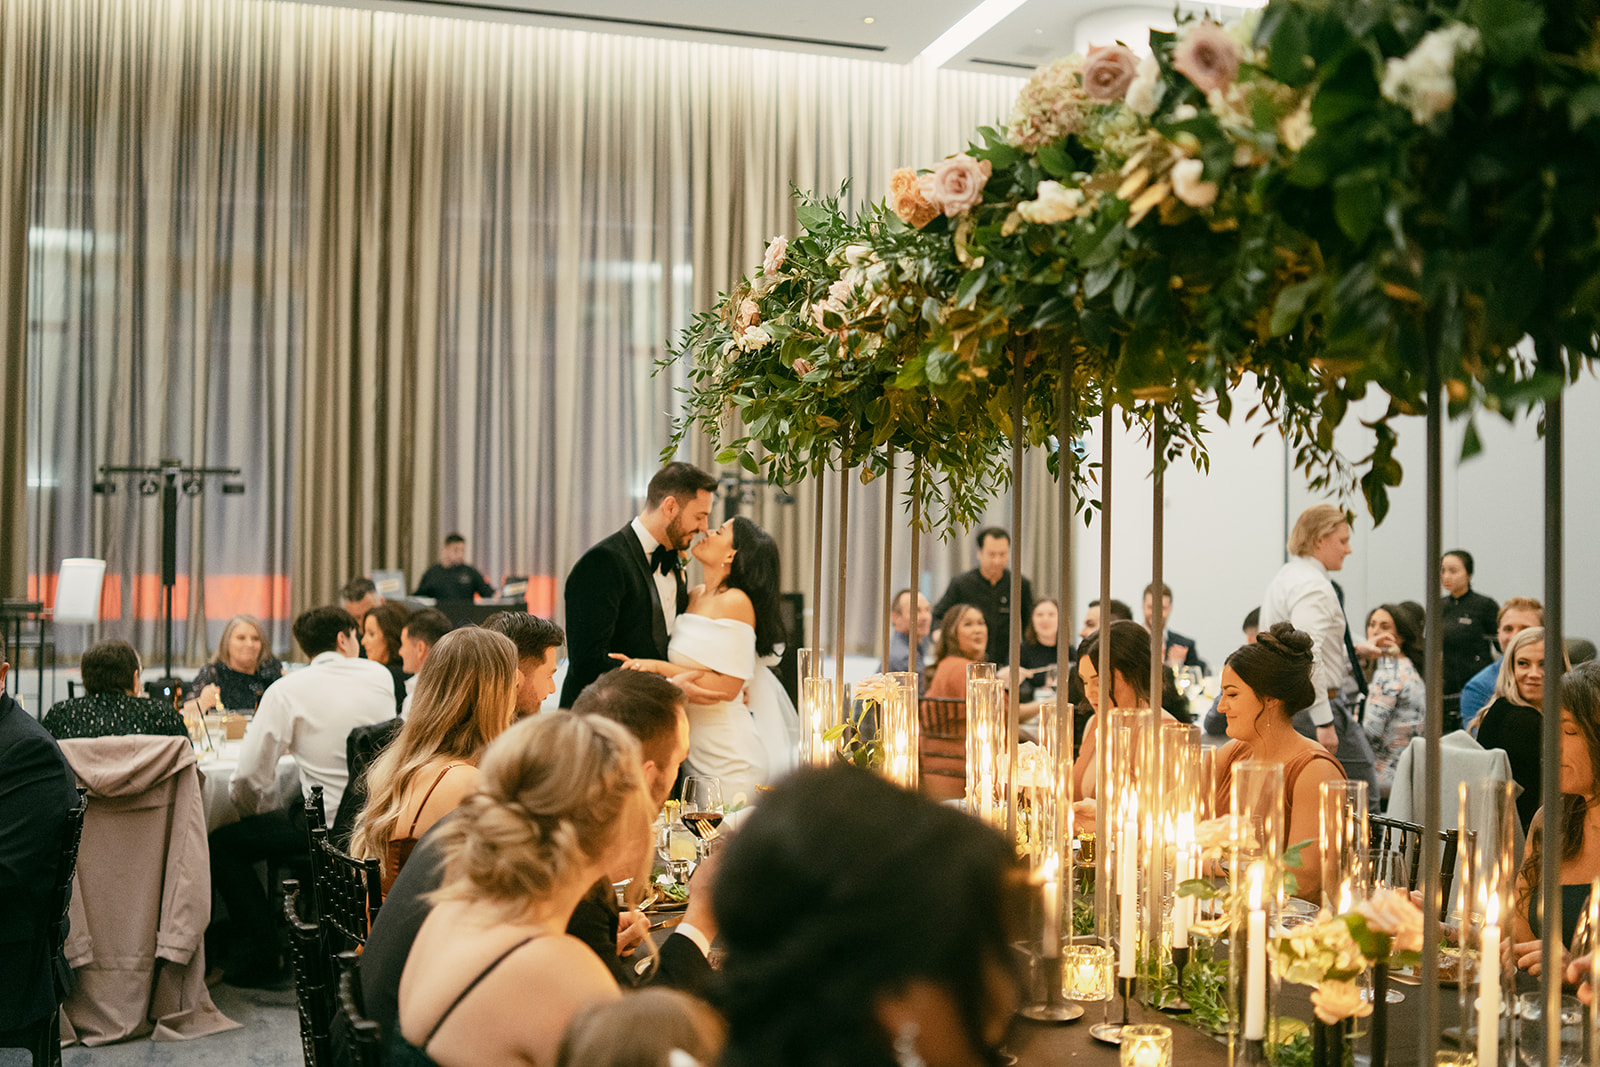 JW Marriott Wedding Reception with Floral Installations 